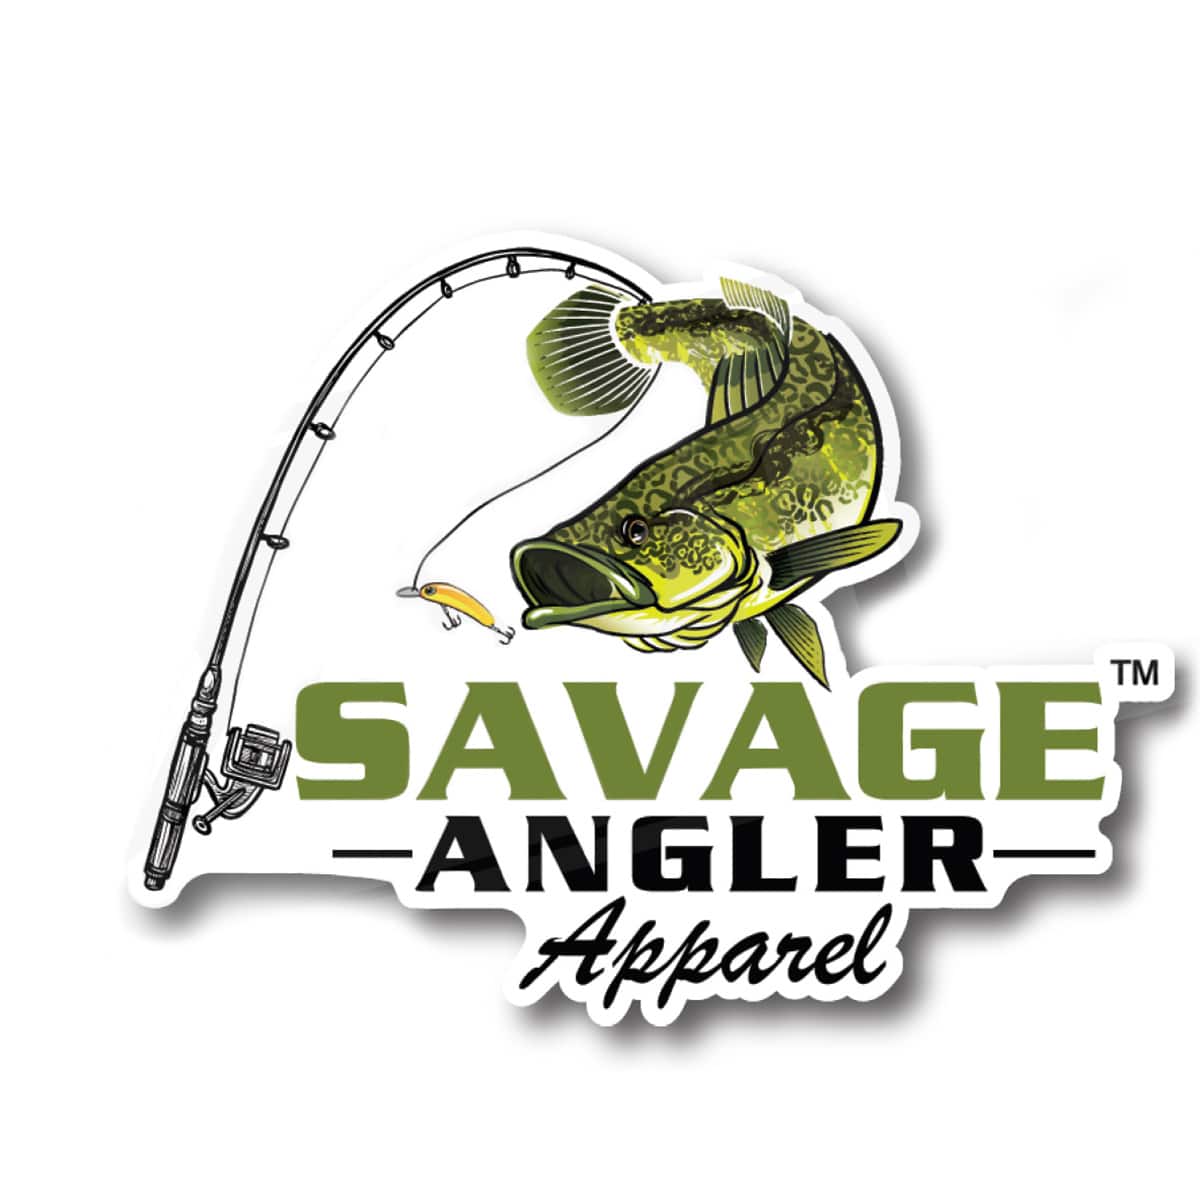 Savage Angler Bass Series Men's Long Sleeve Performance Hoodie